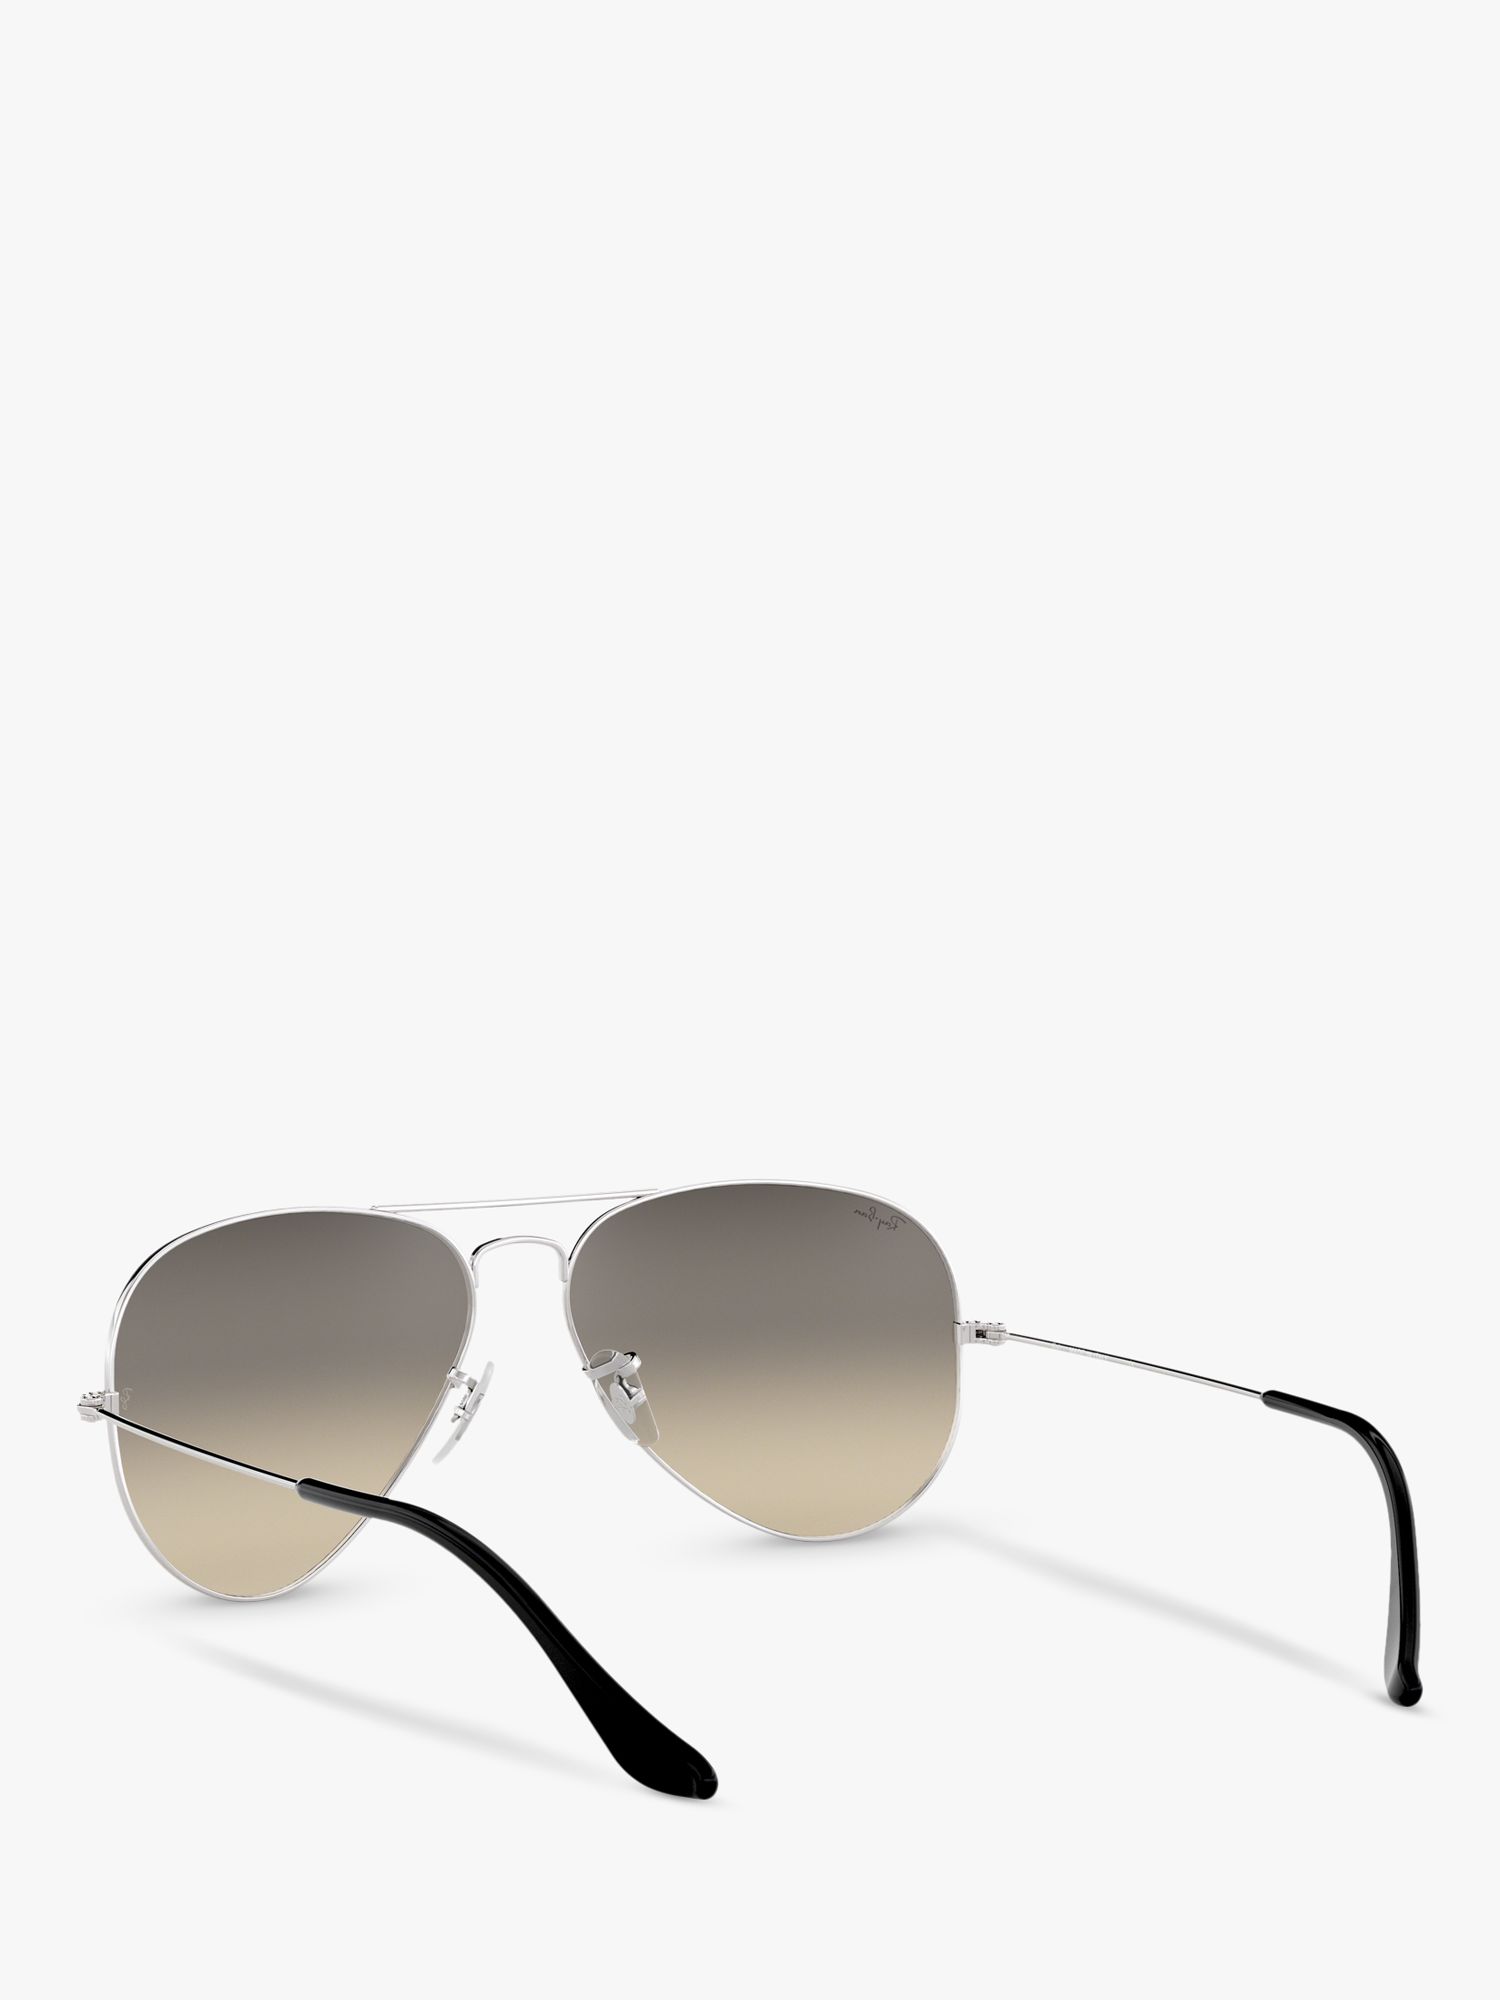 Buy Ray-Ban RB3025 Men's Original Aviator Sunglasses Online at johnlewis.com